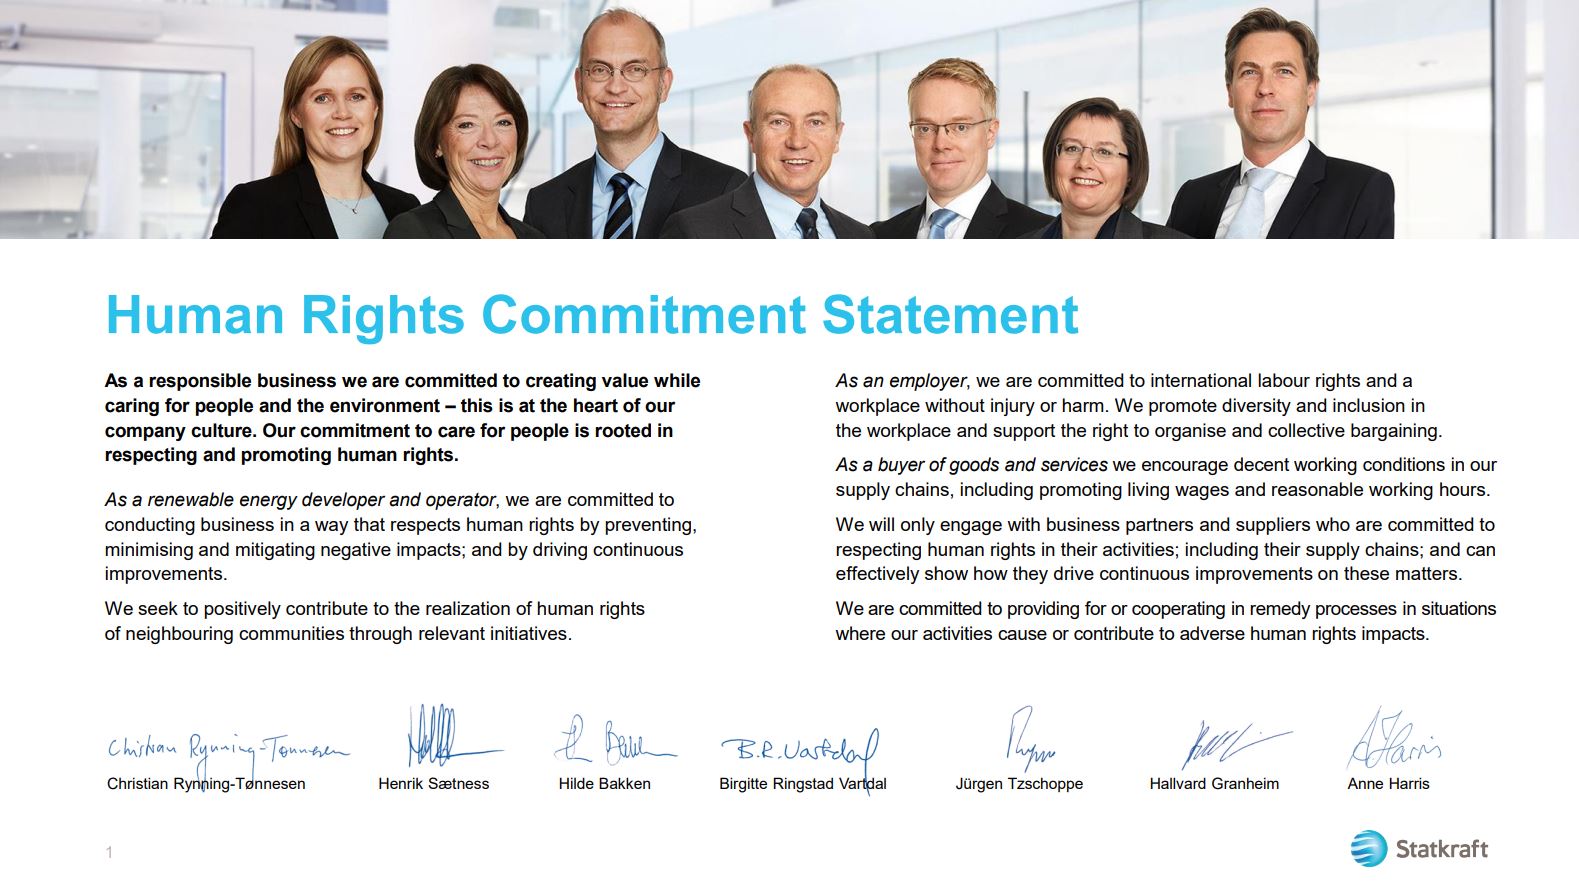 Human rights commitment statement.JPG